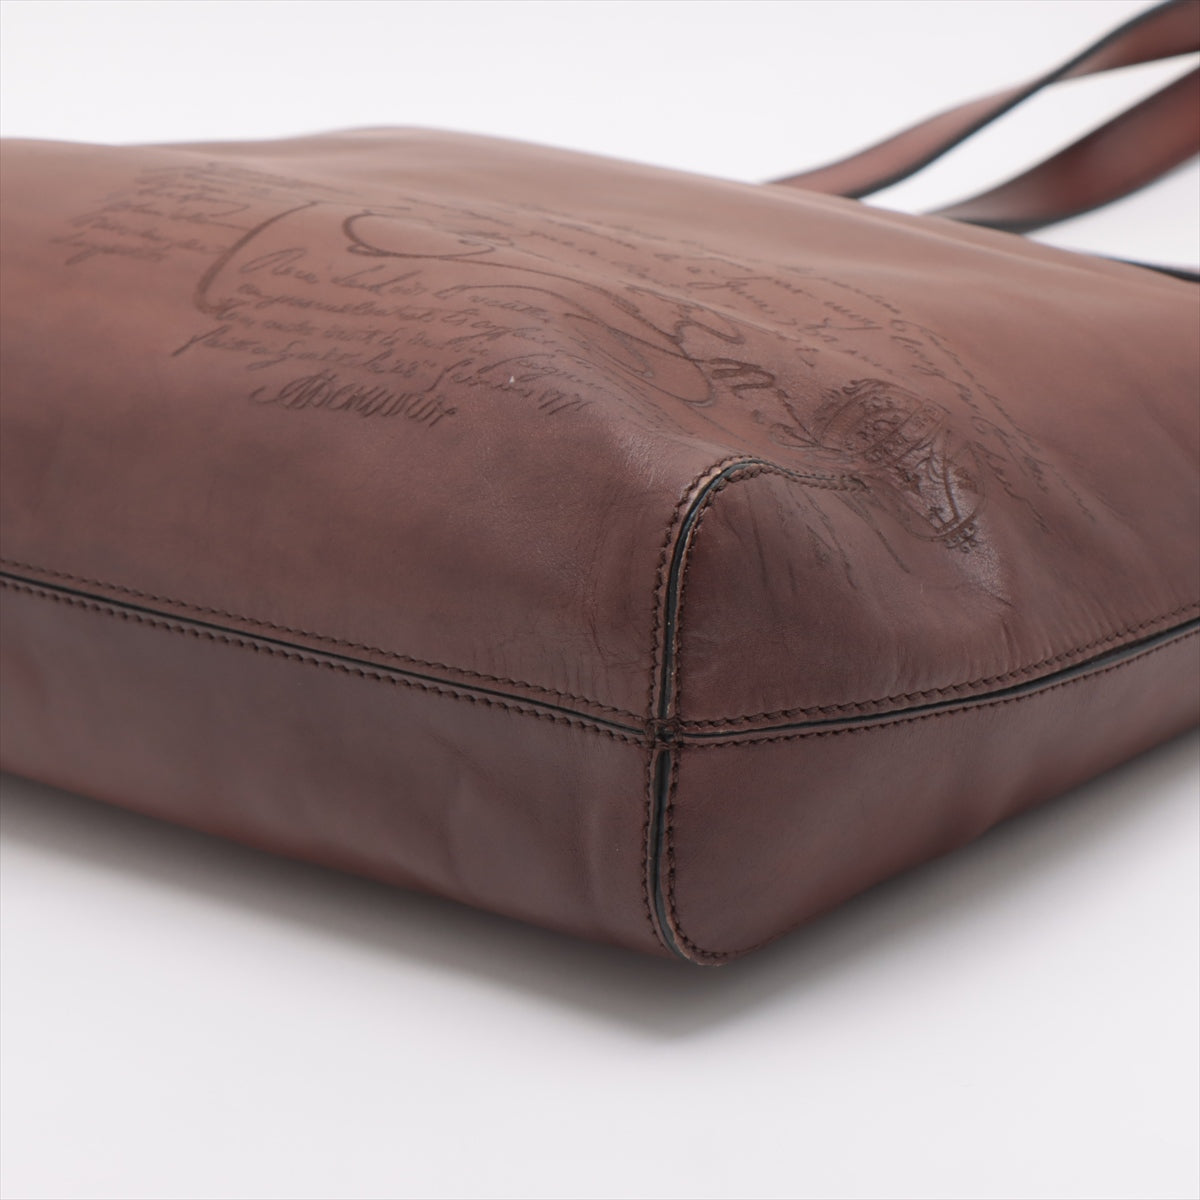 Berluti Calligraphy Leather Tote bag Brown